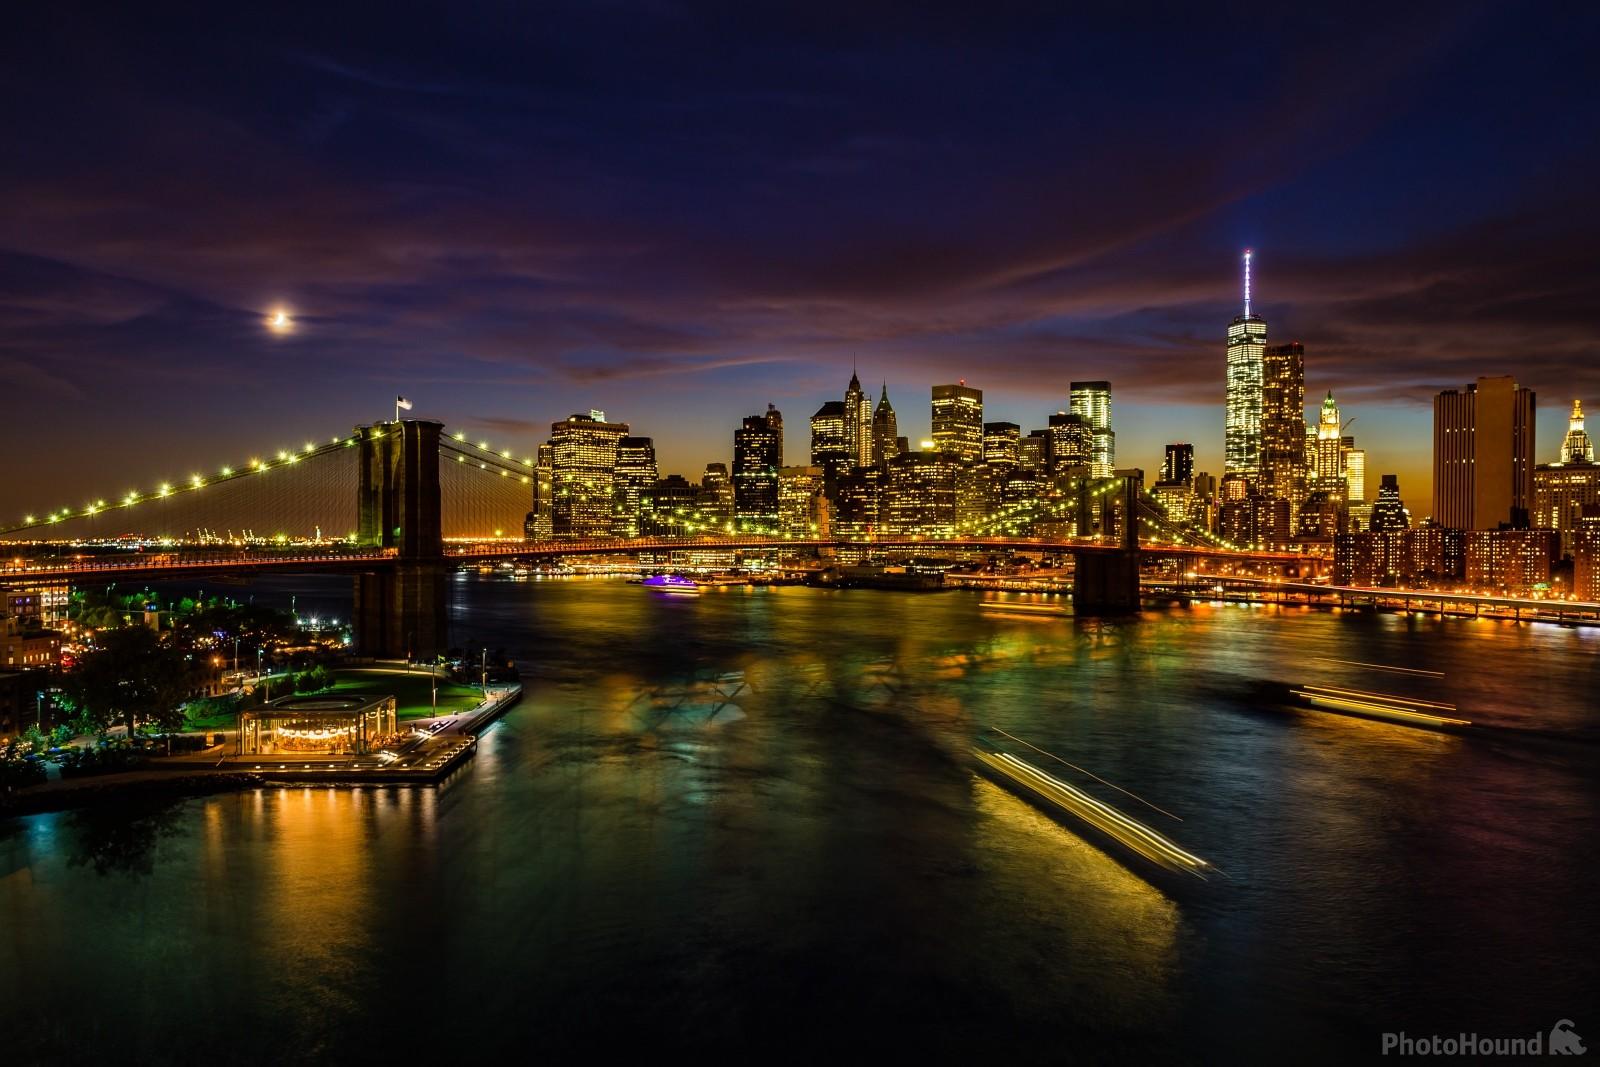 Image of Brooklyn Bridge and Lower Manhattan from the Manhattan Bridge by VOJTa Herout